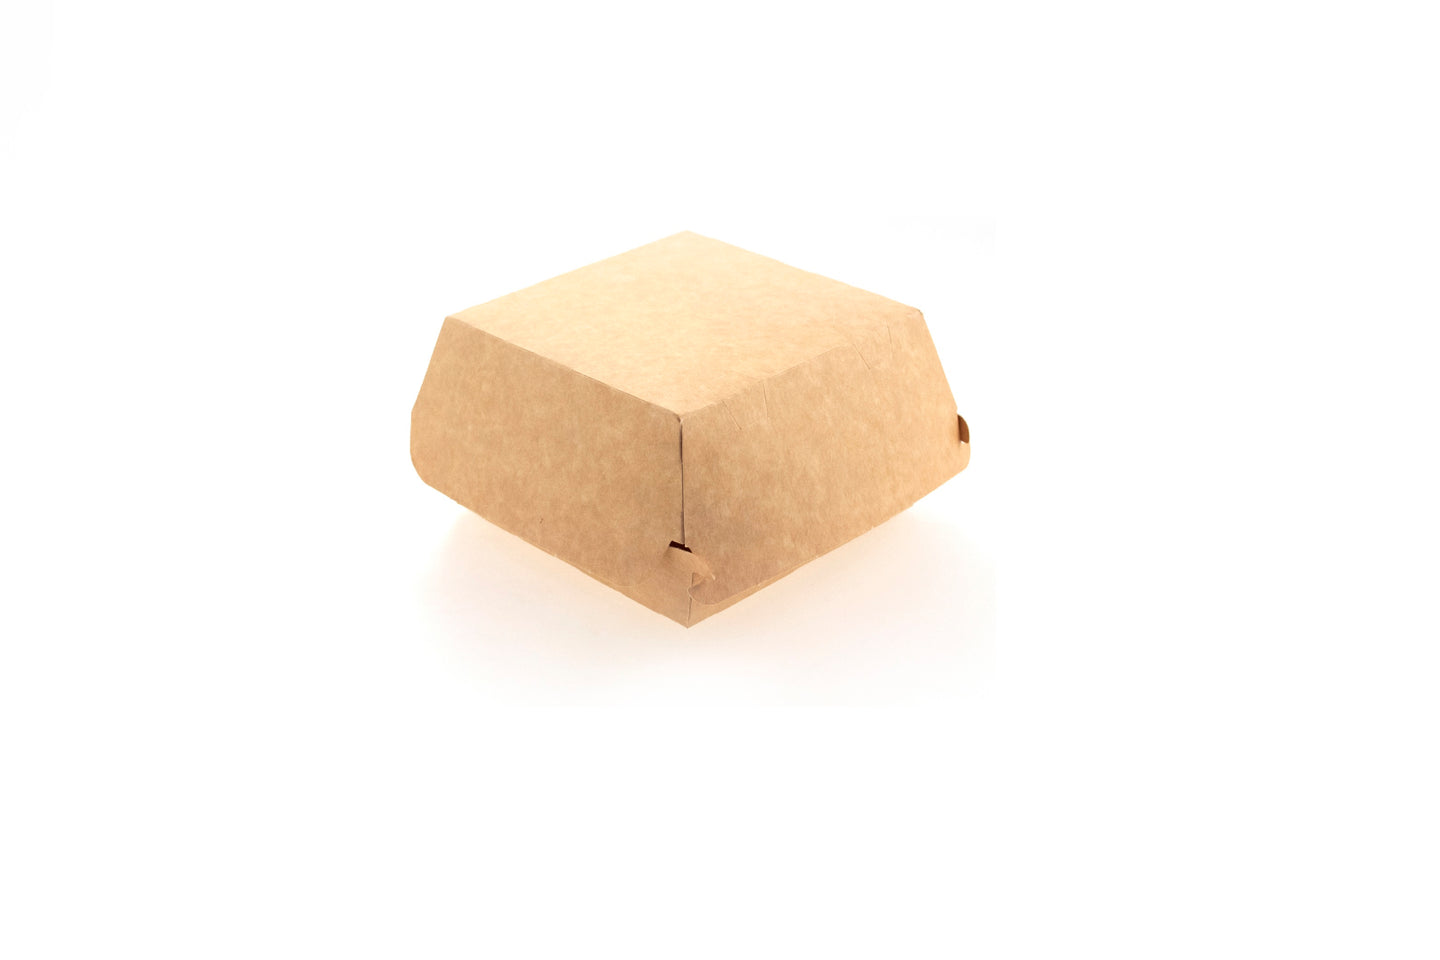 Hamburger box Brown - 11x11x7.3 cm 